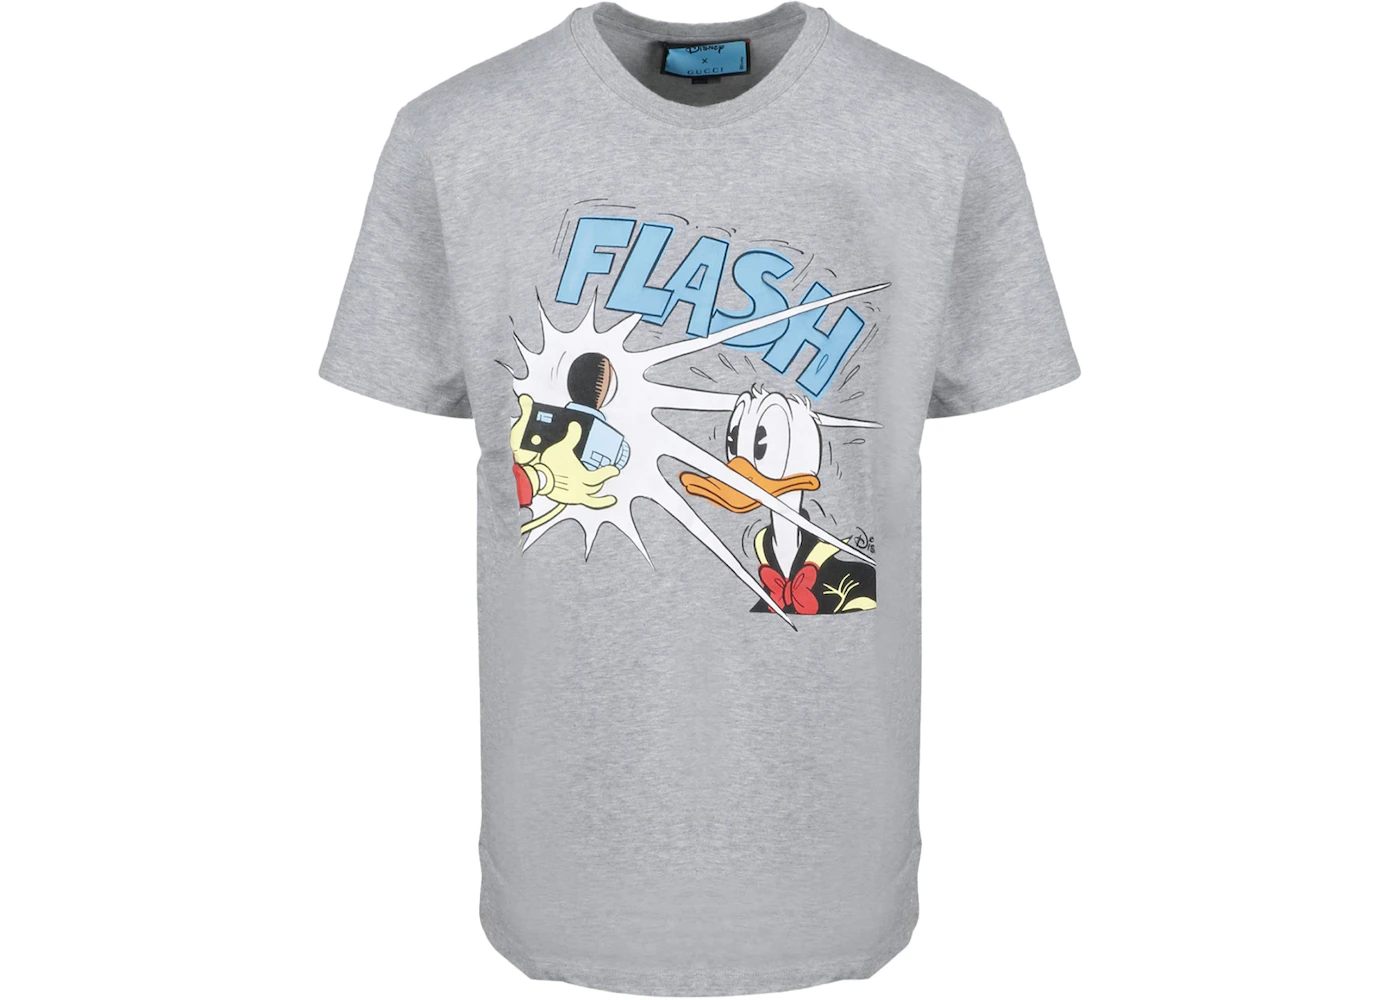 Gucci x Disney Donald Duck T-Shirt Grey/Multi - US